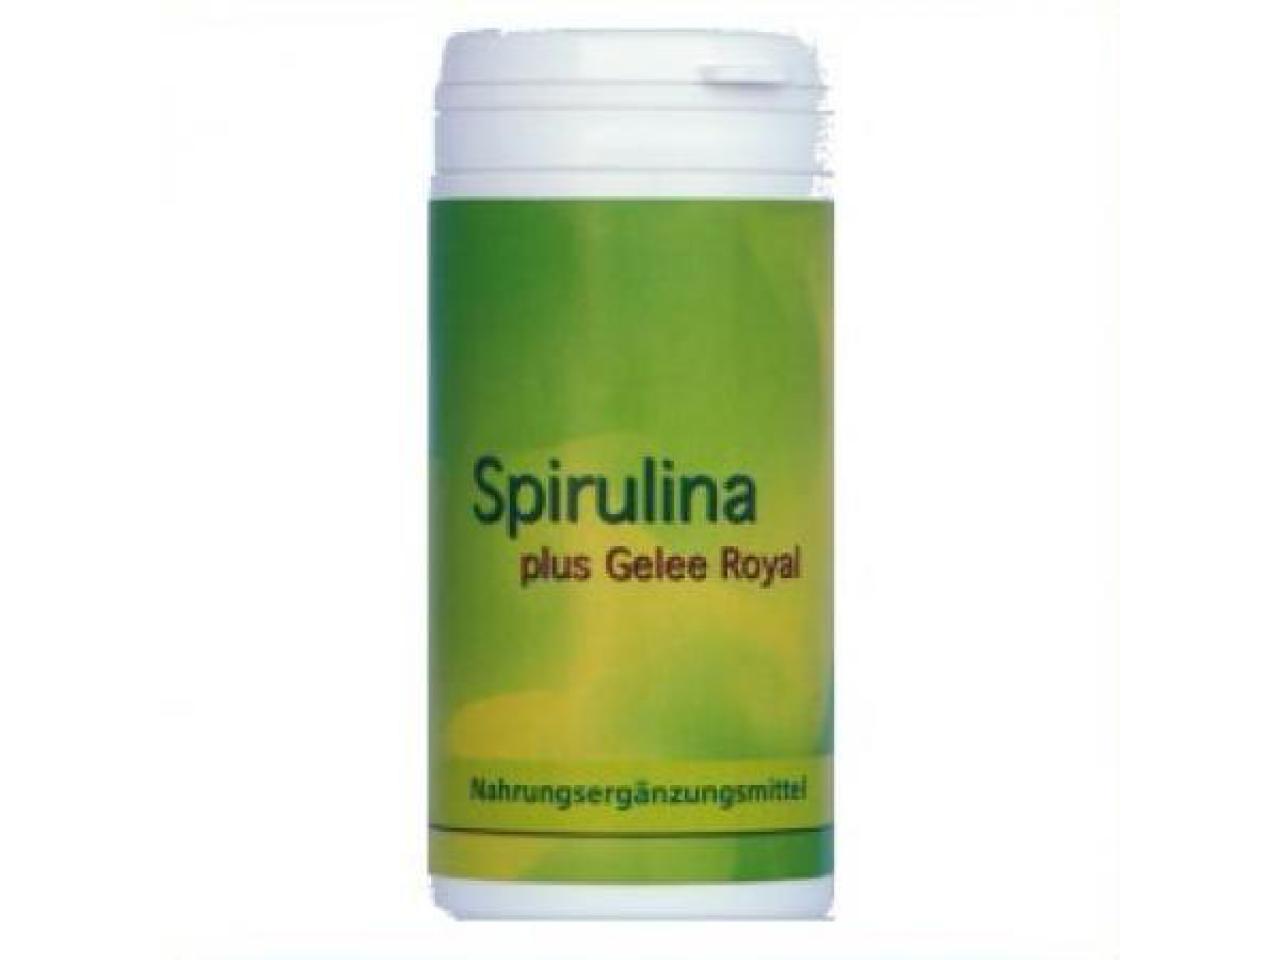 OMEGA - Spirulina plus Gelee Royal 60 Kapseln | 31,5 g